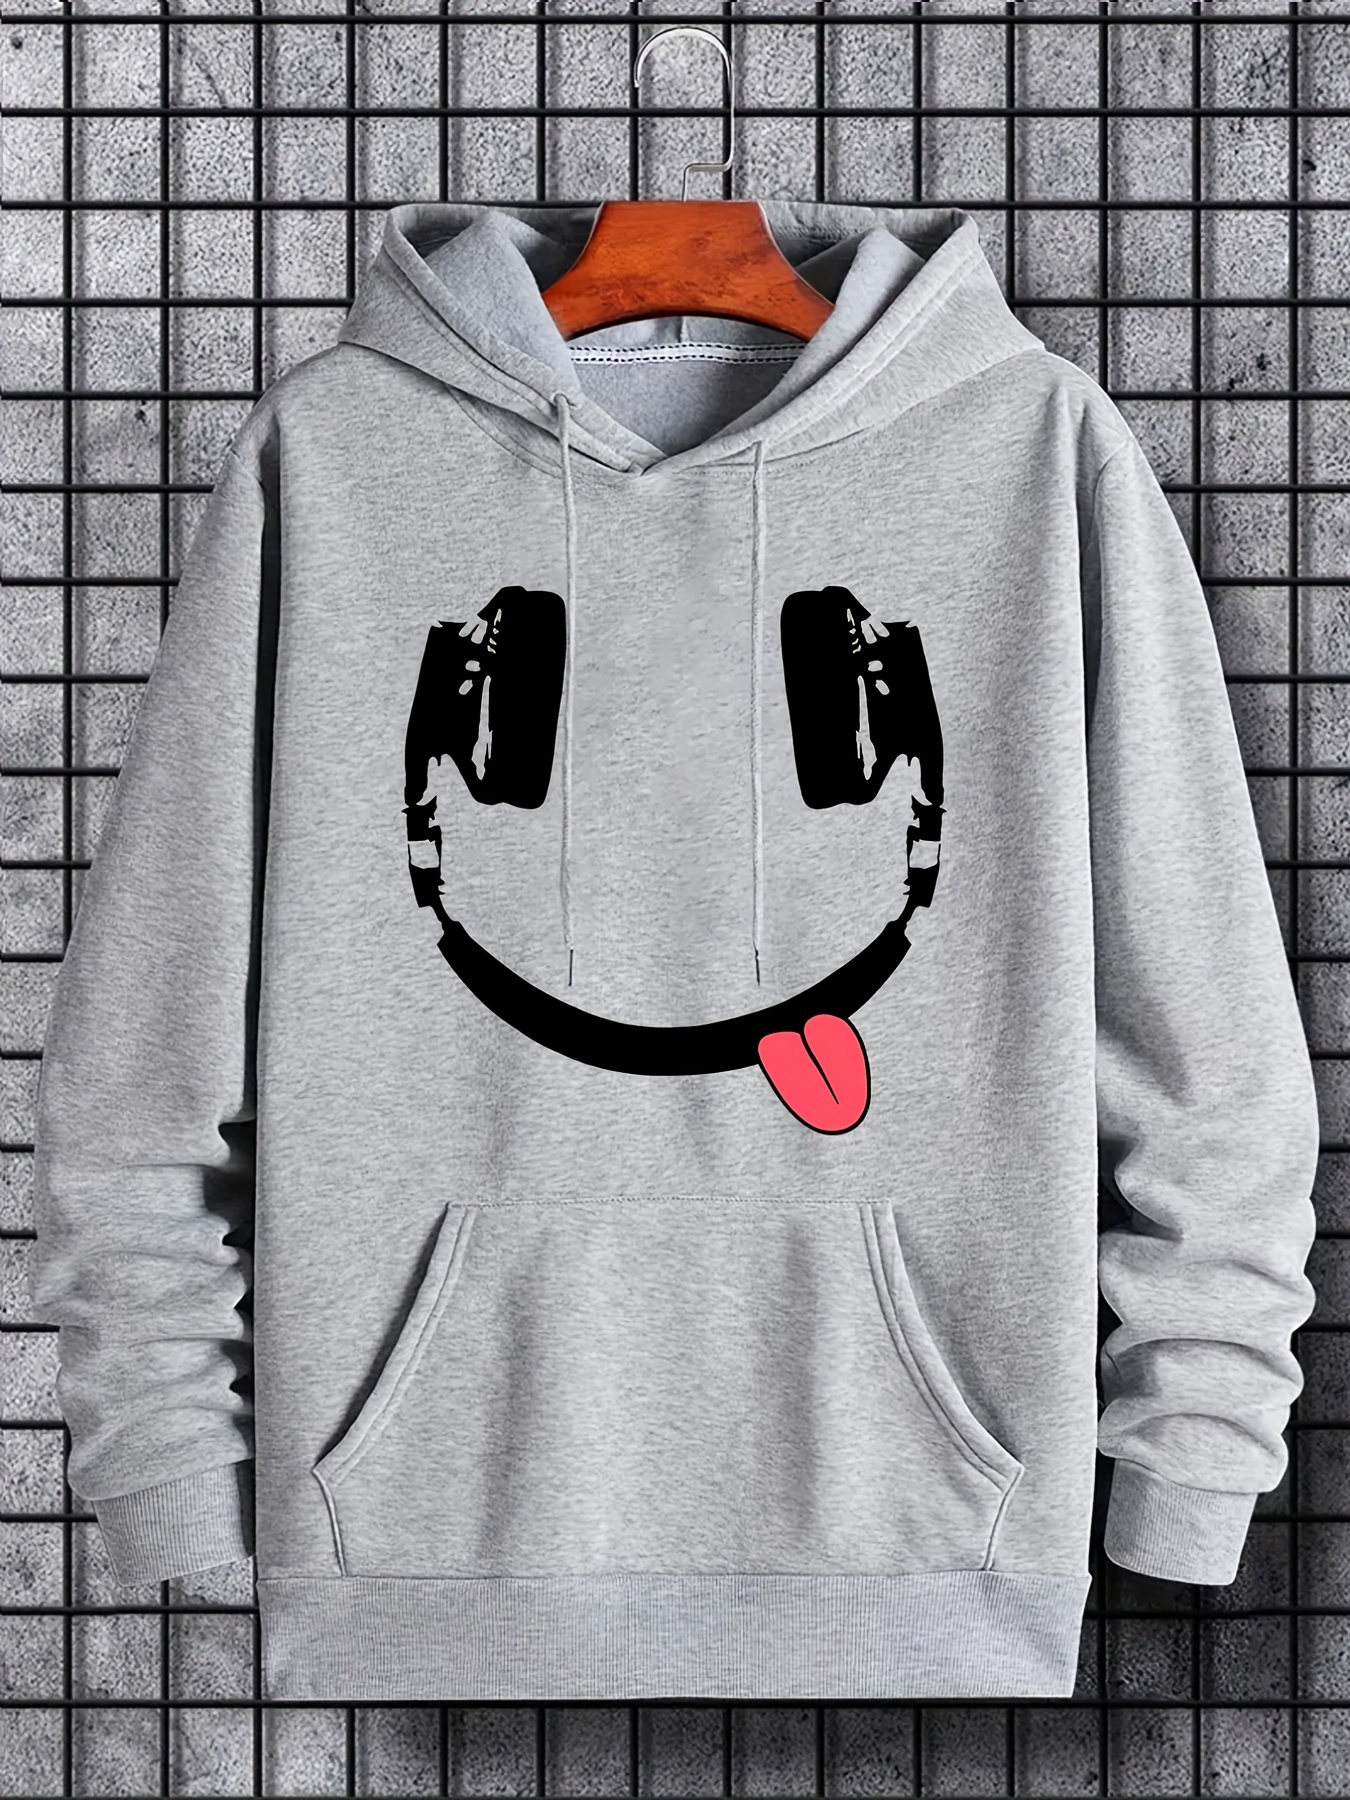 headphone smile print hoodie hoodies for men mens casual graphic design pullover hooded sweatshirt with kangaroo pocket streetwear for winter fall as gifts details 21